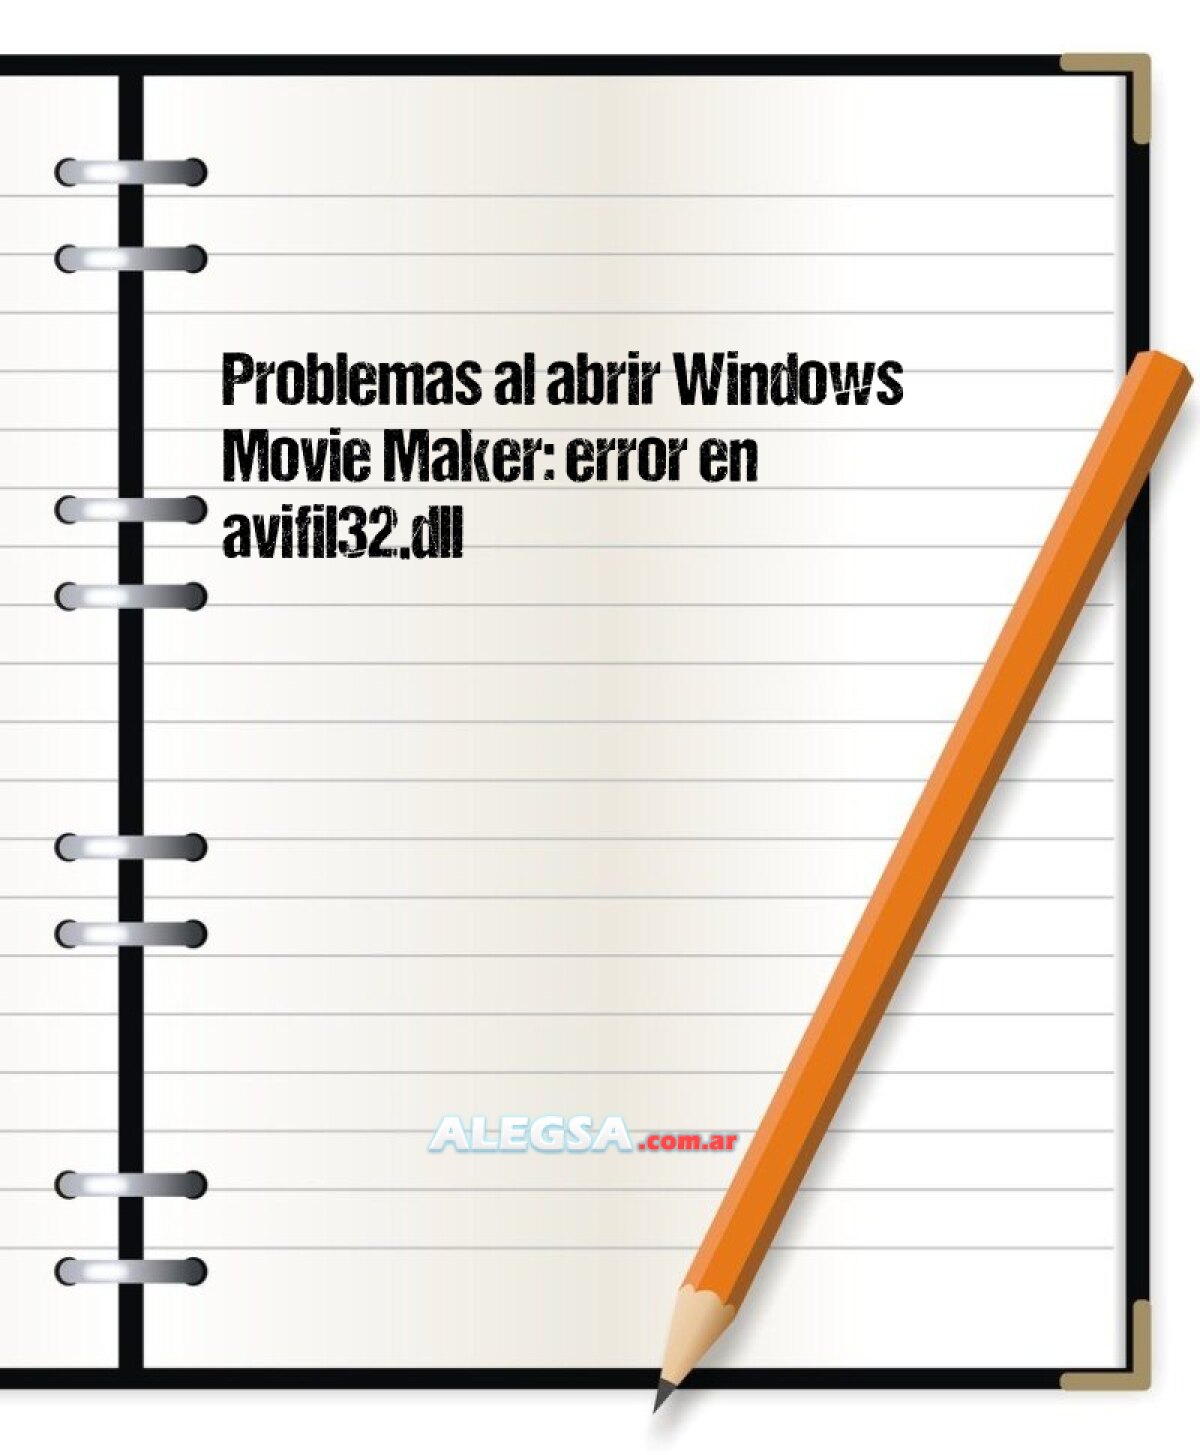 Problemas al abrir Windows Movie Maker: error en avifil32.dll